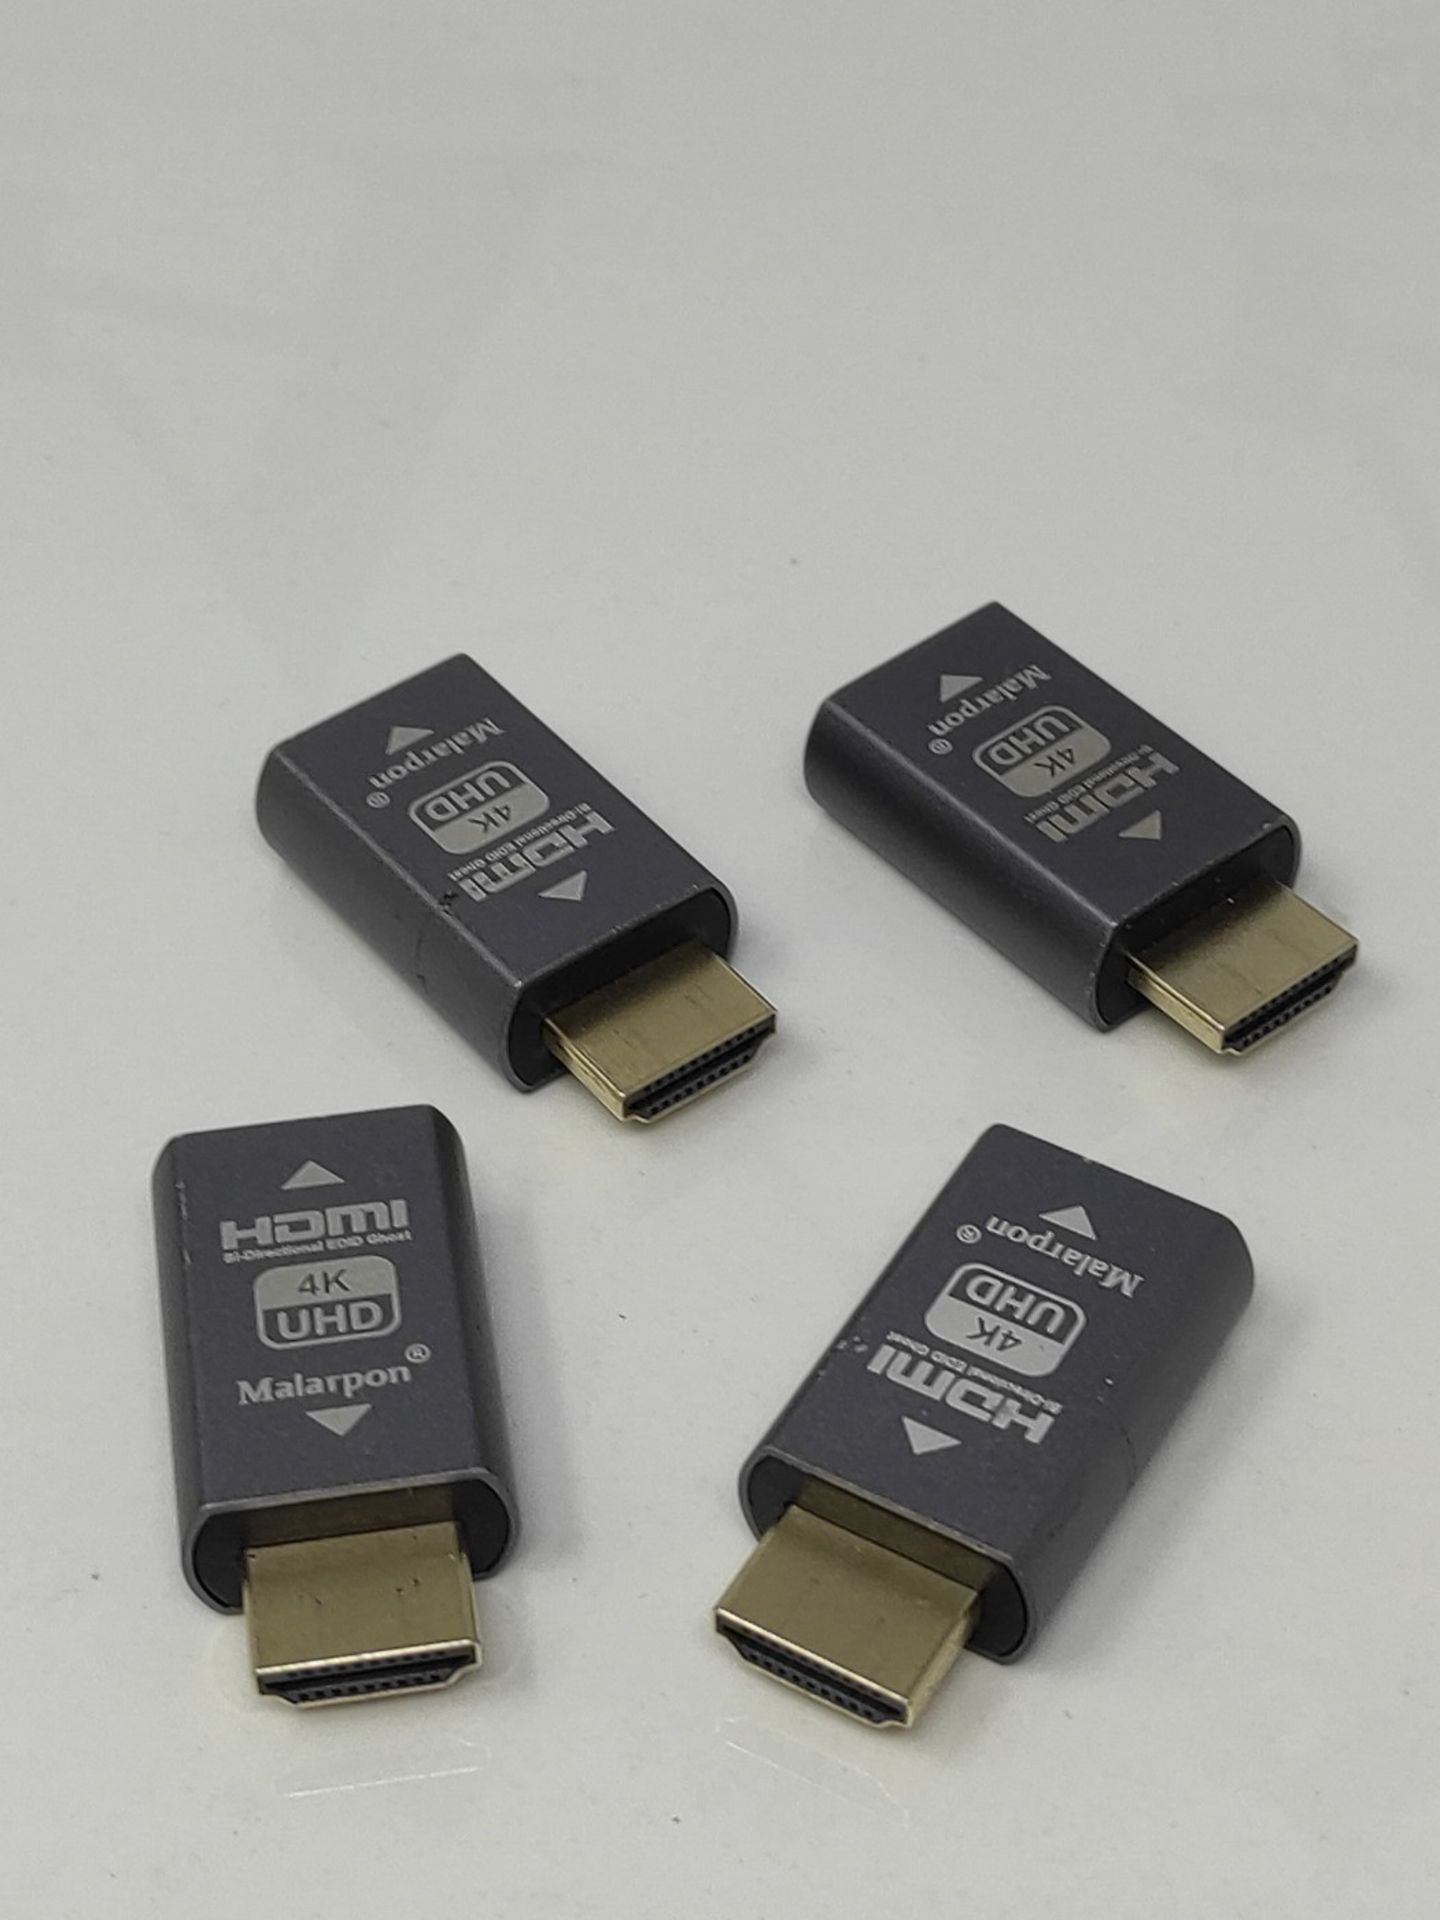 HDMI Edid Emulator Passthrough 3rd Gen Aluminum Headless Keep The EDID of the Monitor, - Image 2 of 2